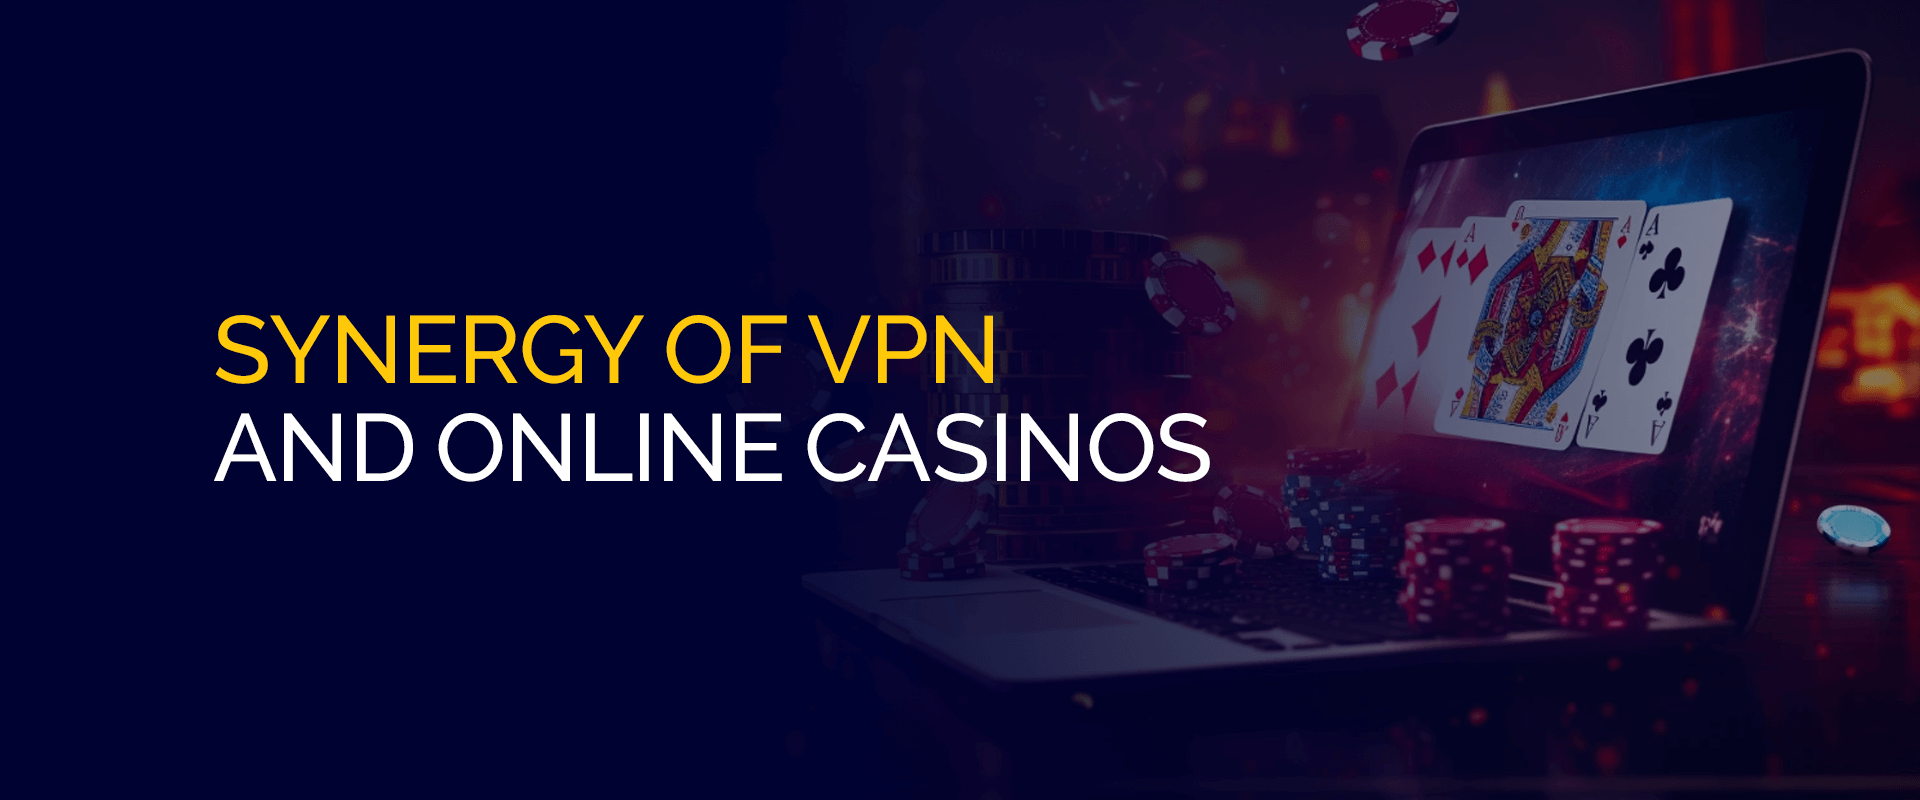 VPN 和在线赌场的协同作用